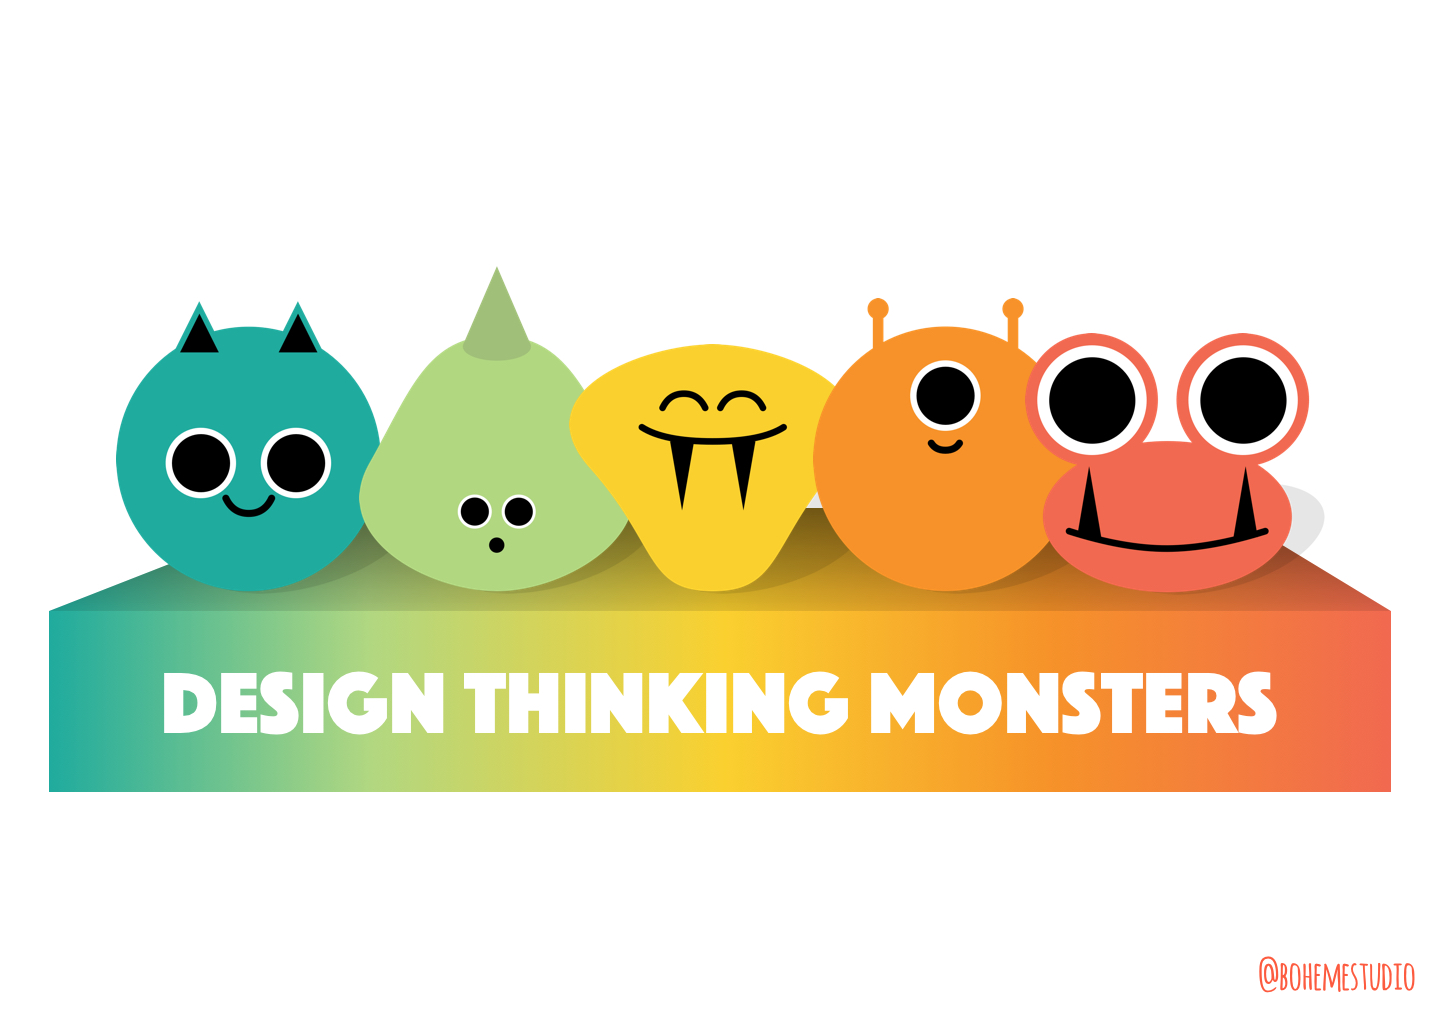 Design Thinking Monsters by bohemestudio